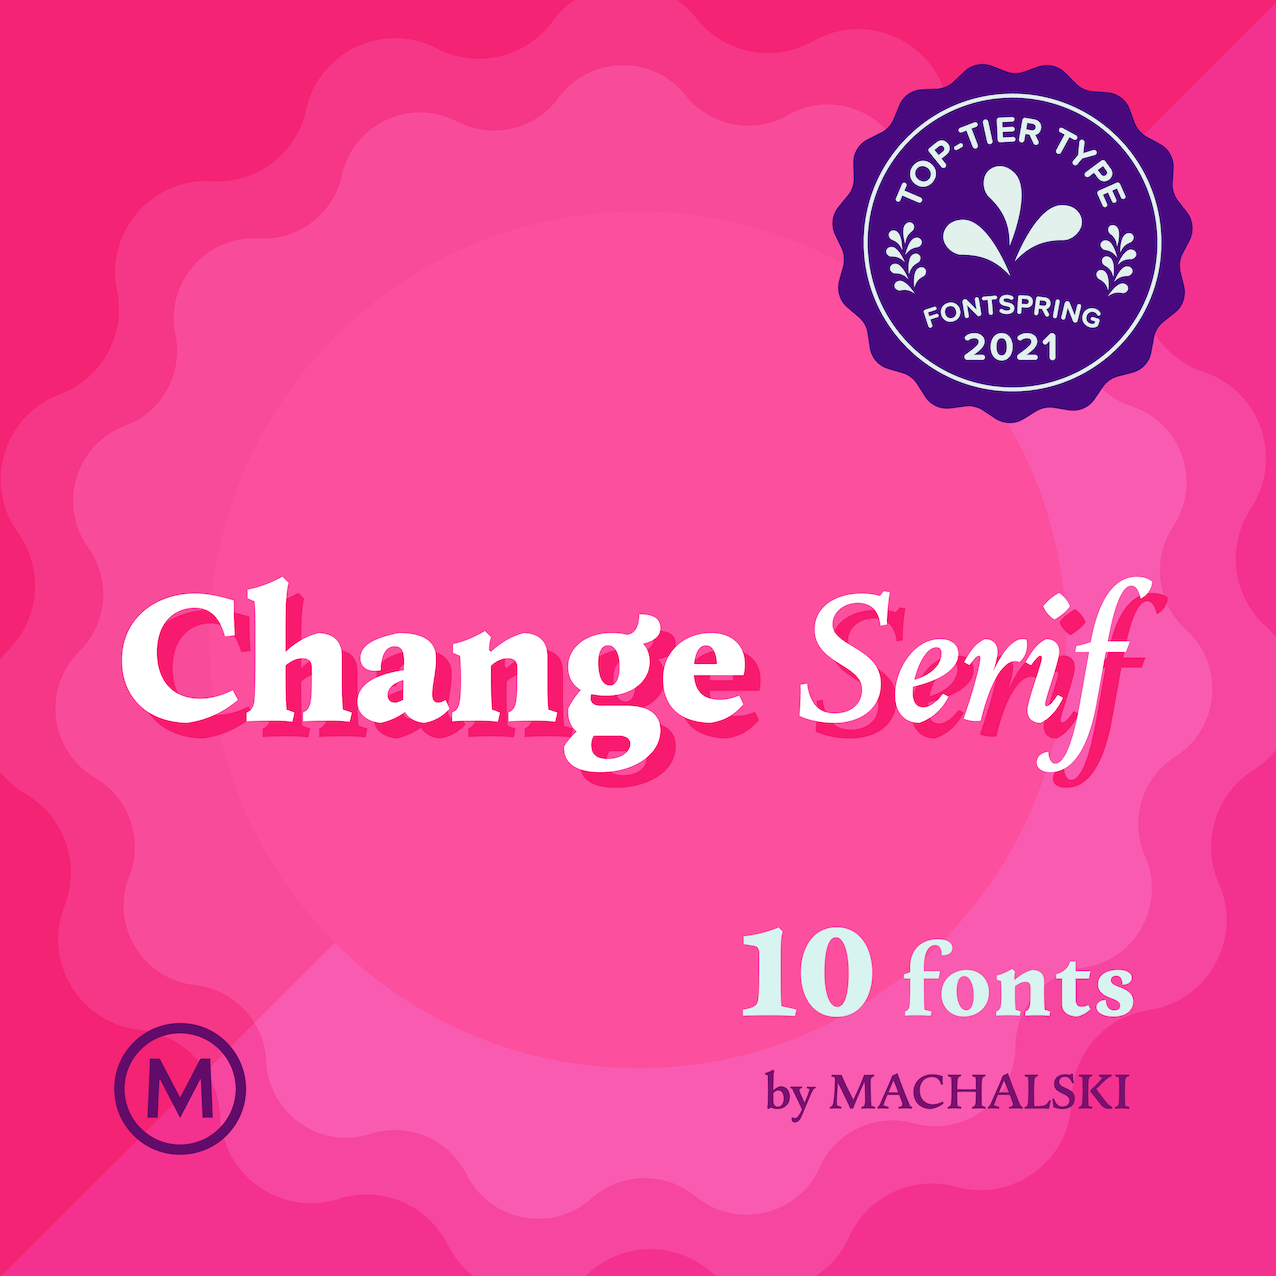 Change Serif Poster